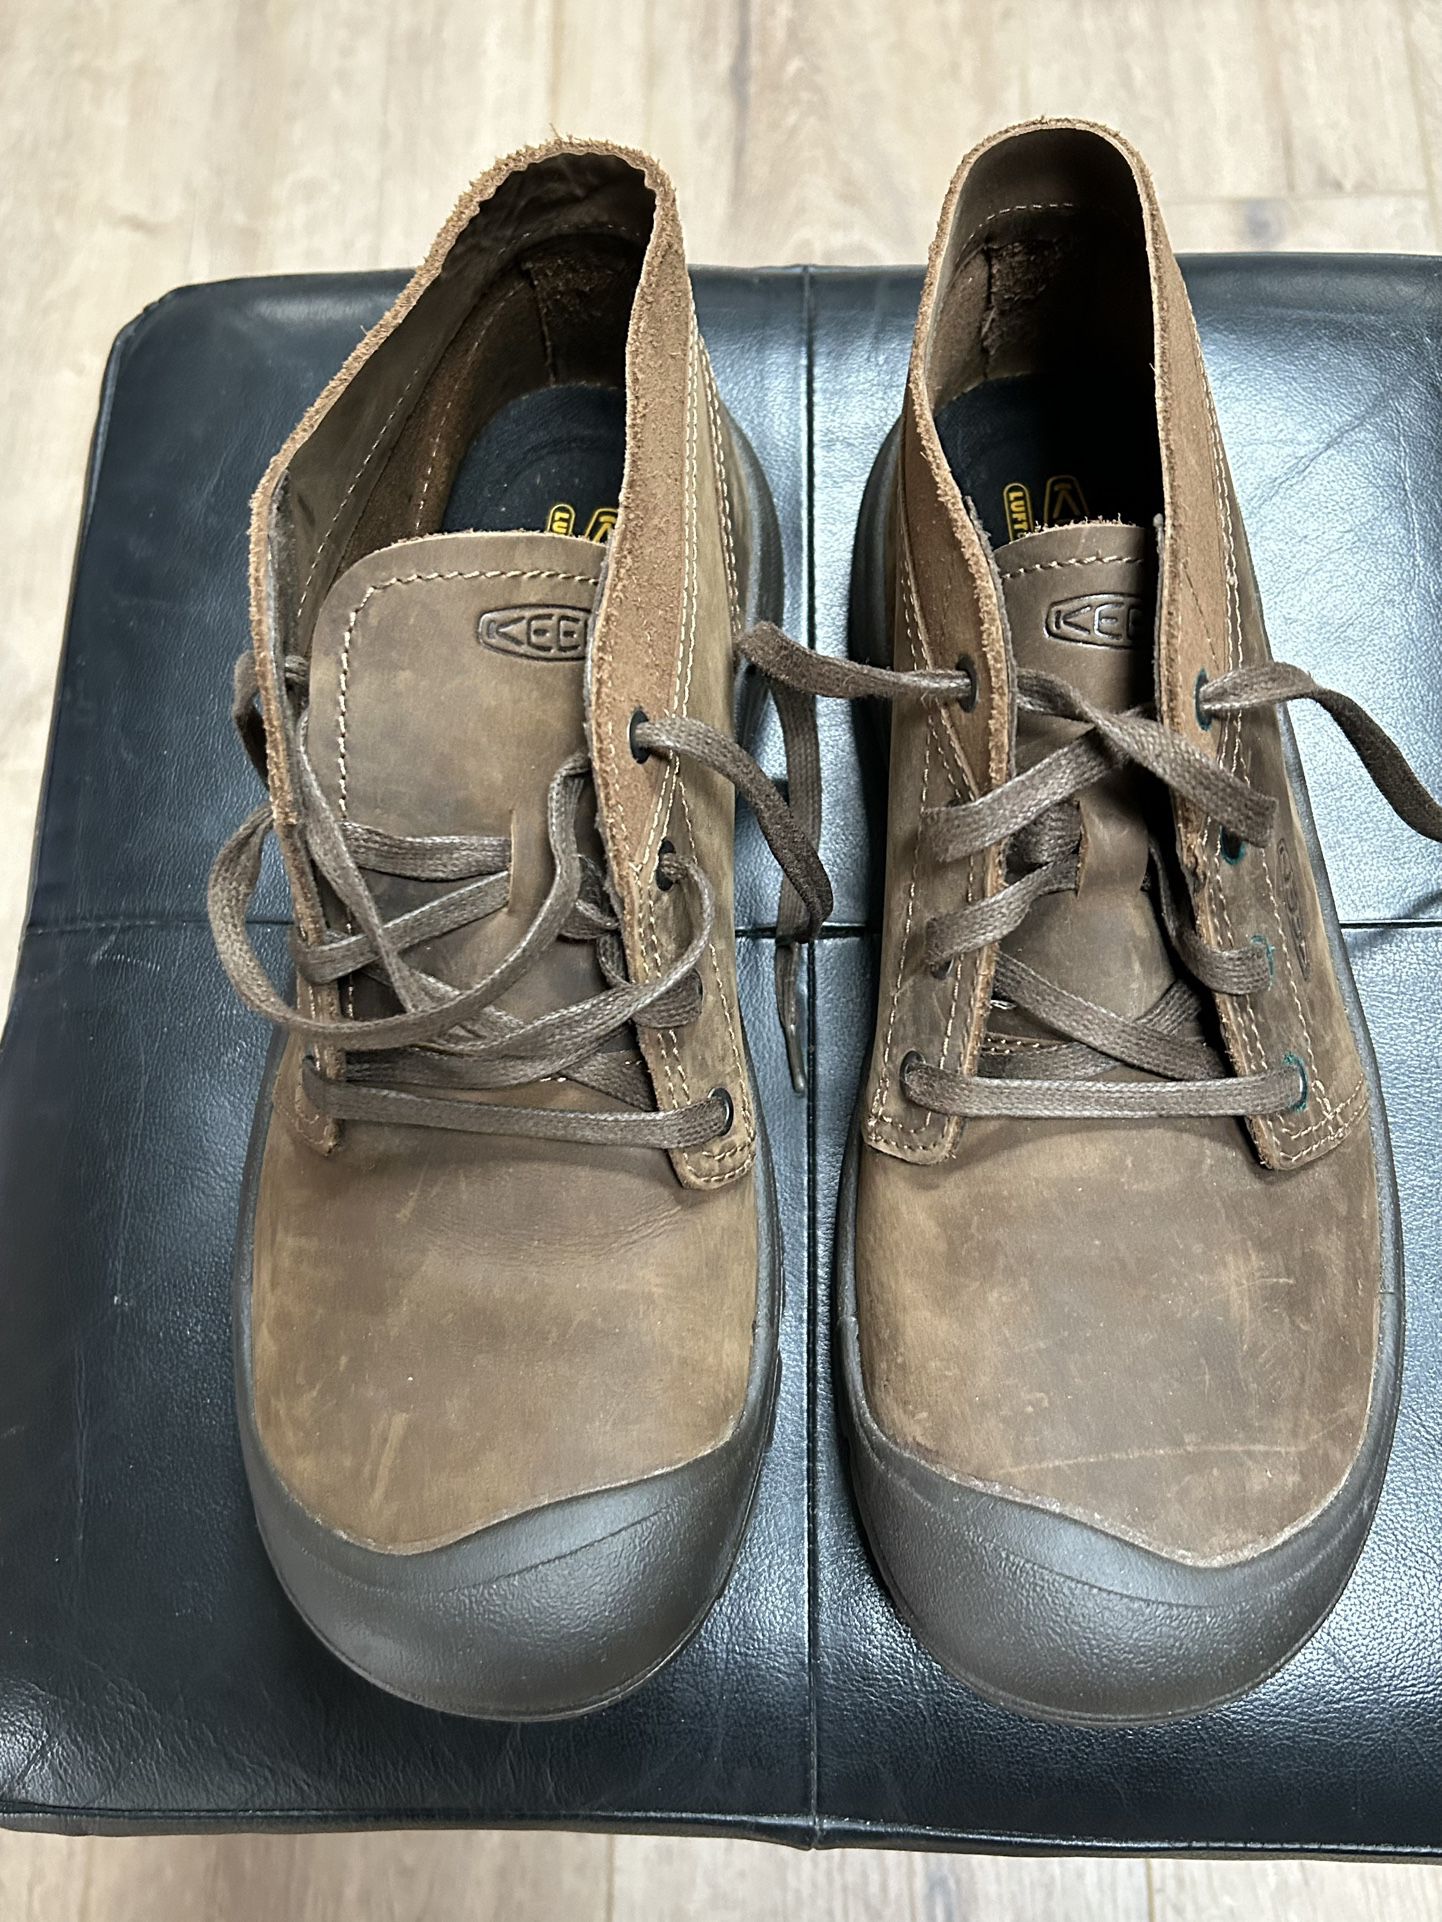 Men’s Keen Hiking Boots- Size12- Never Worn 